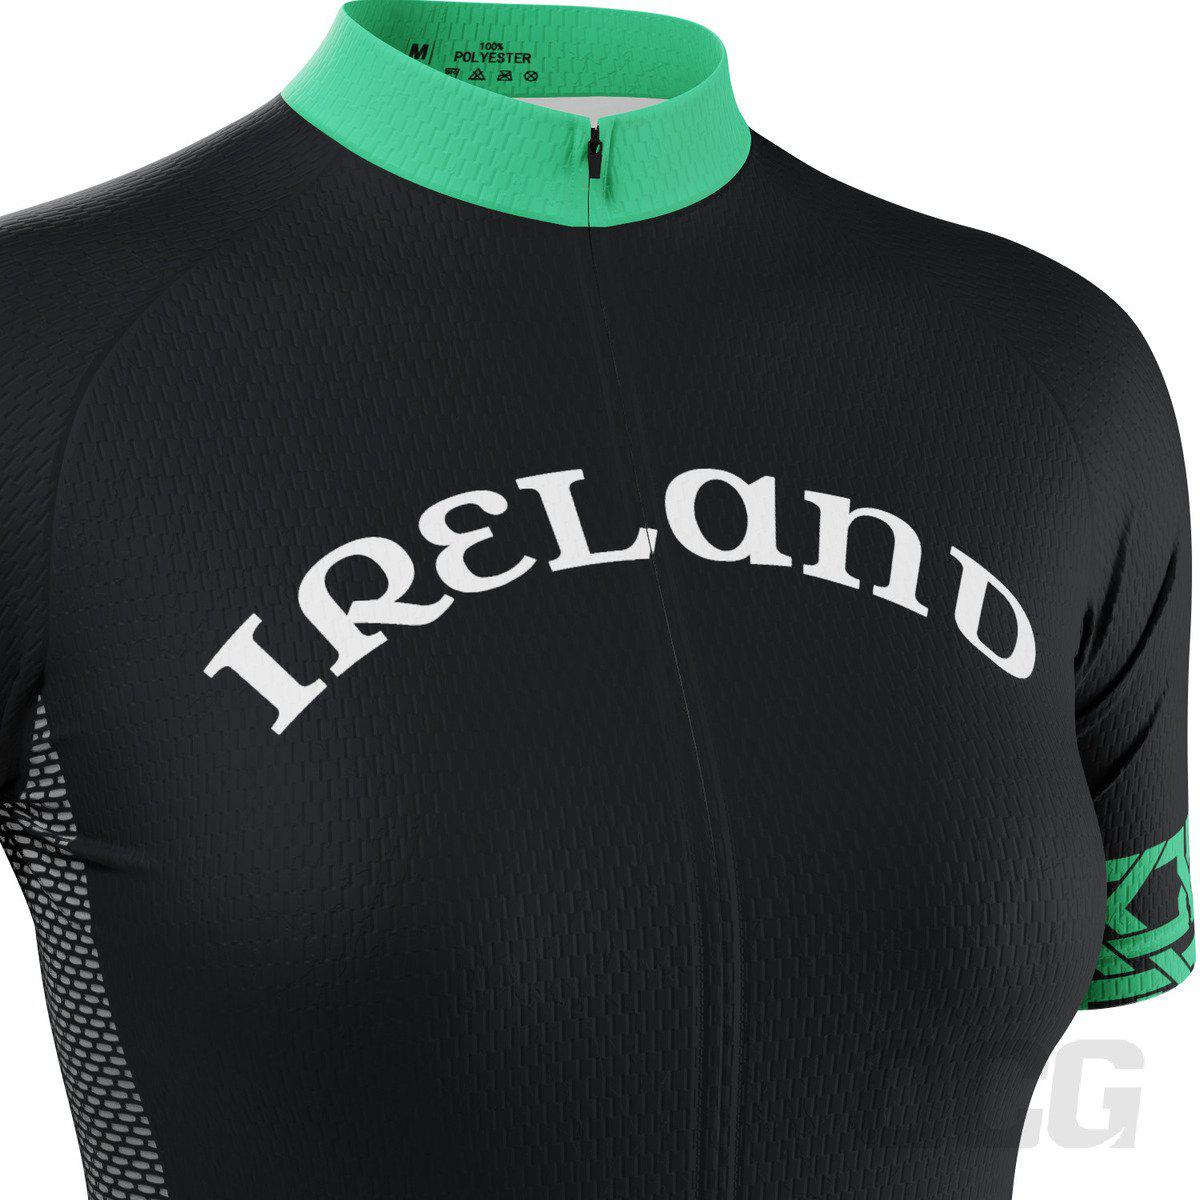 Women's Ireland Erie Shamrock Short Sleeve Cycling Jersey